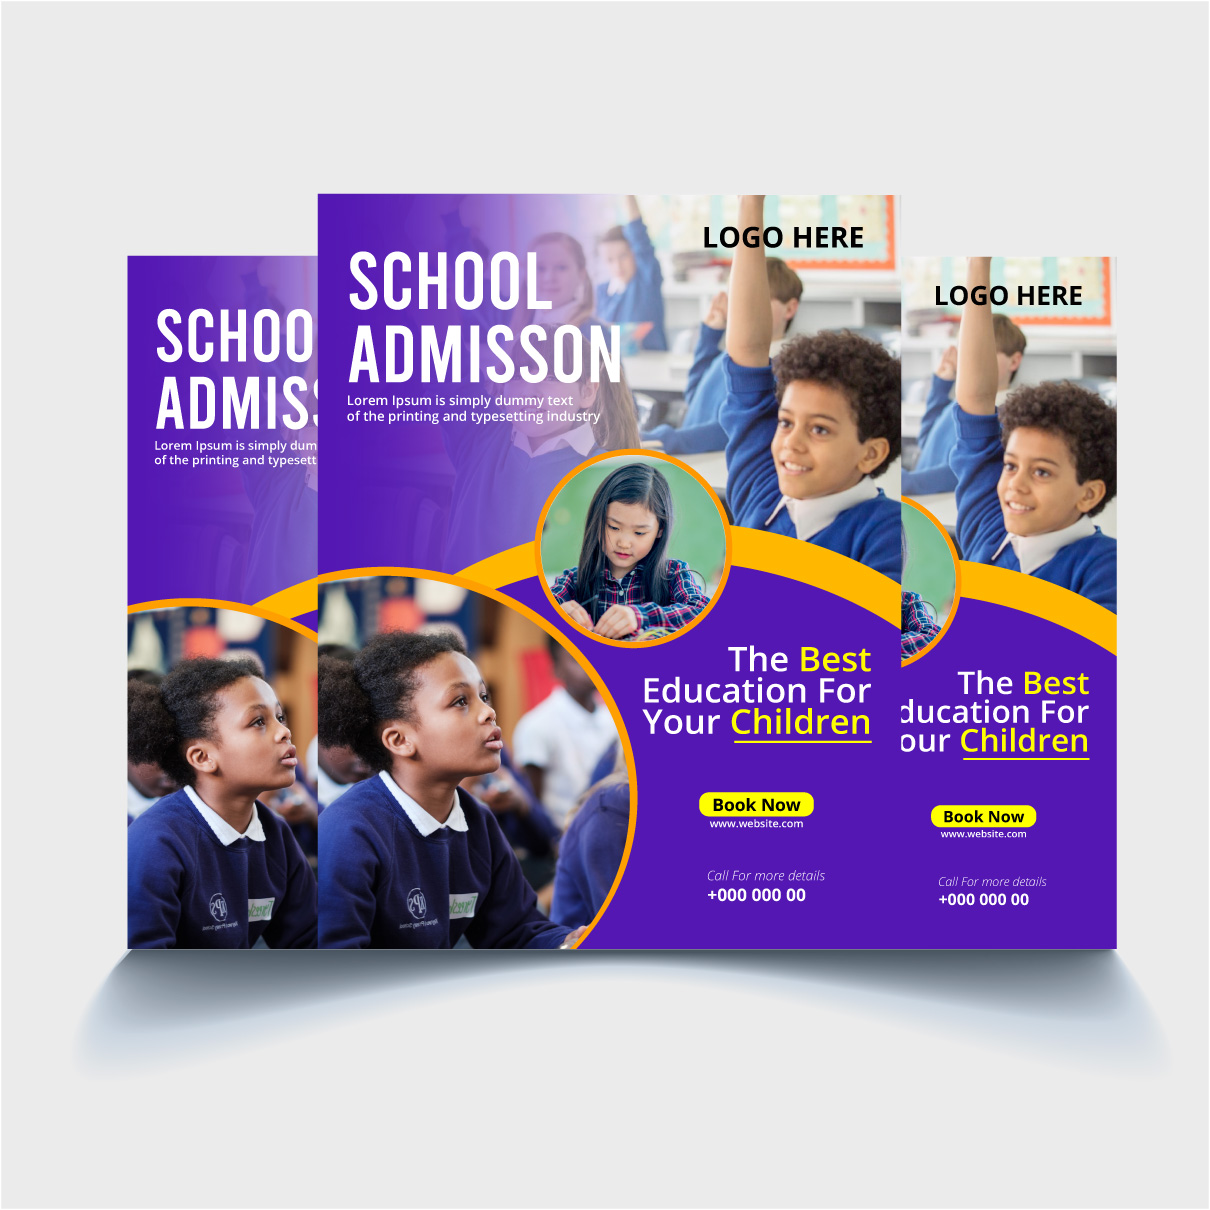 School Admission flyer, Kids School Admission cover image.